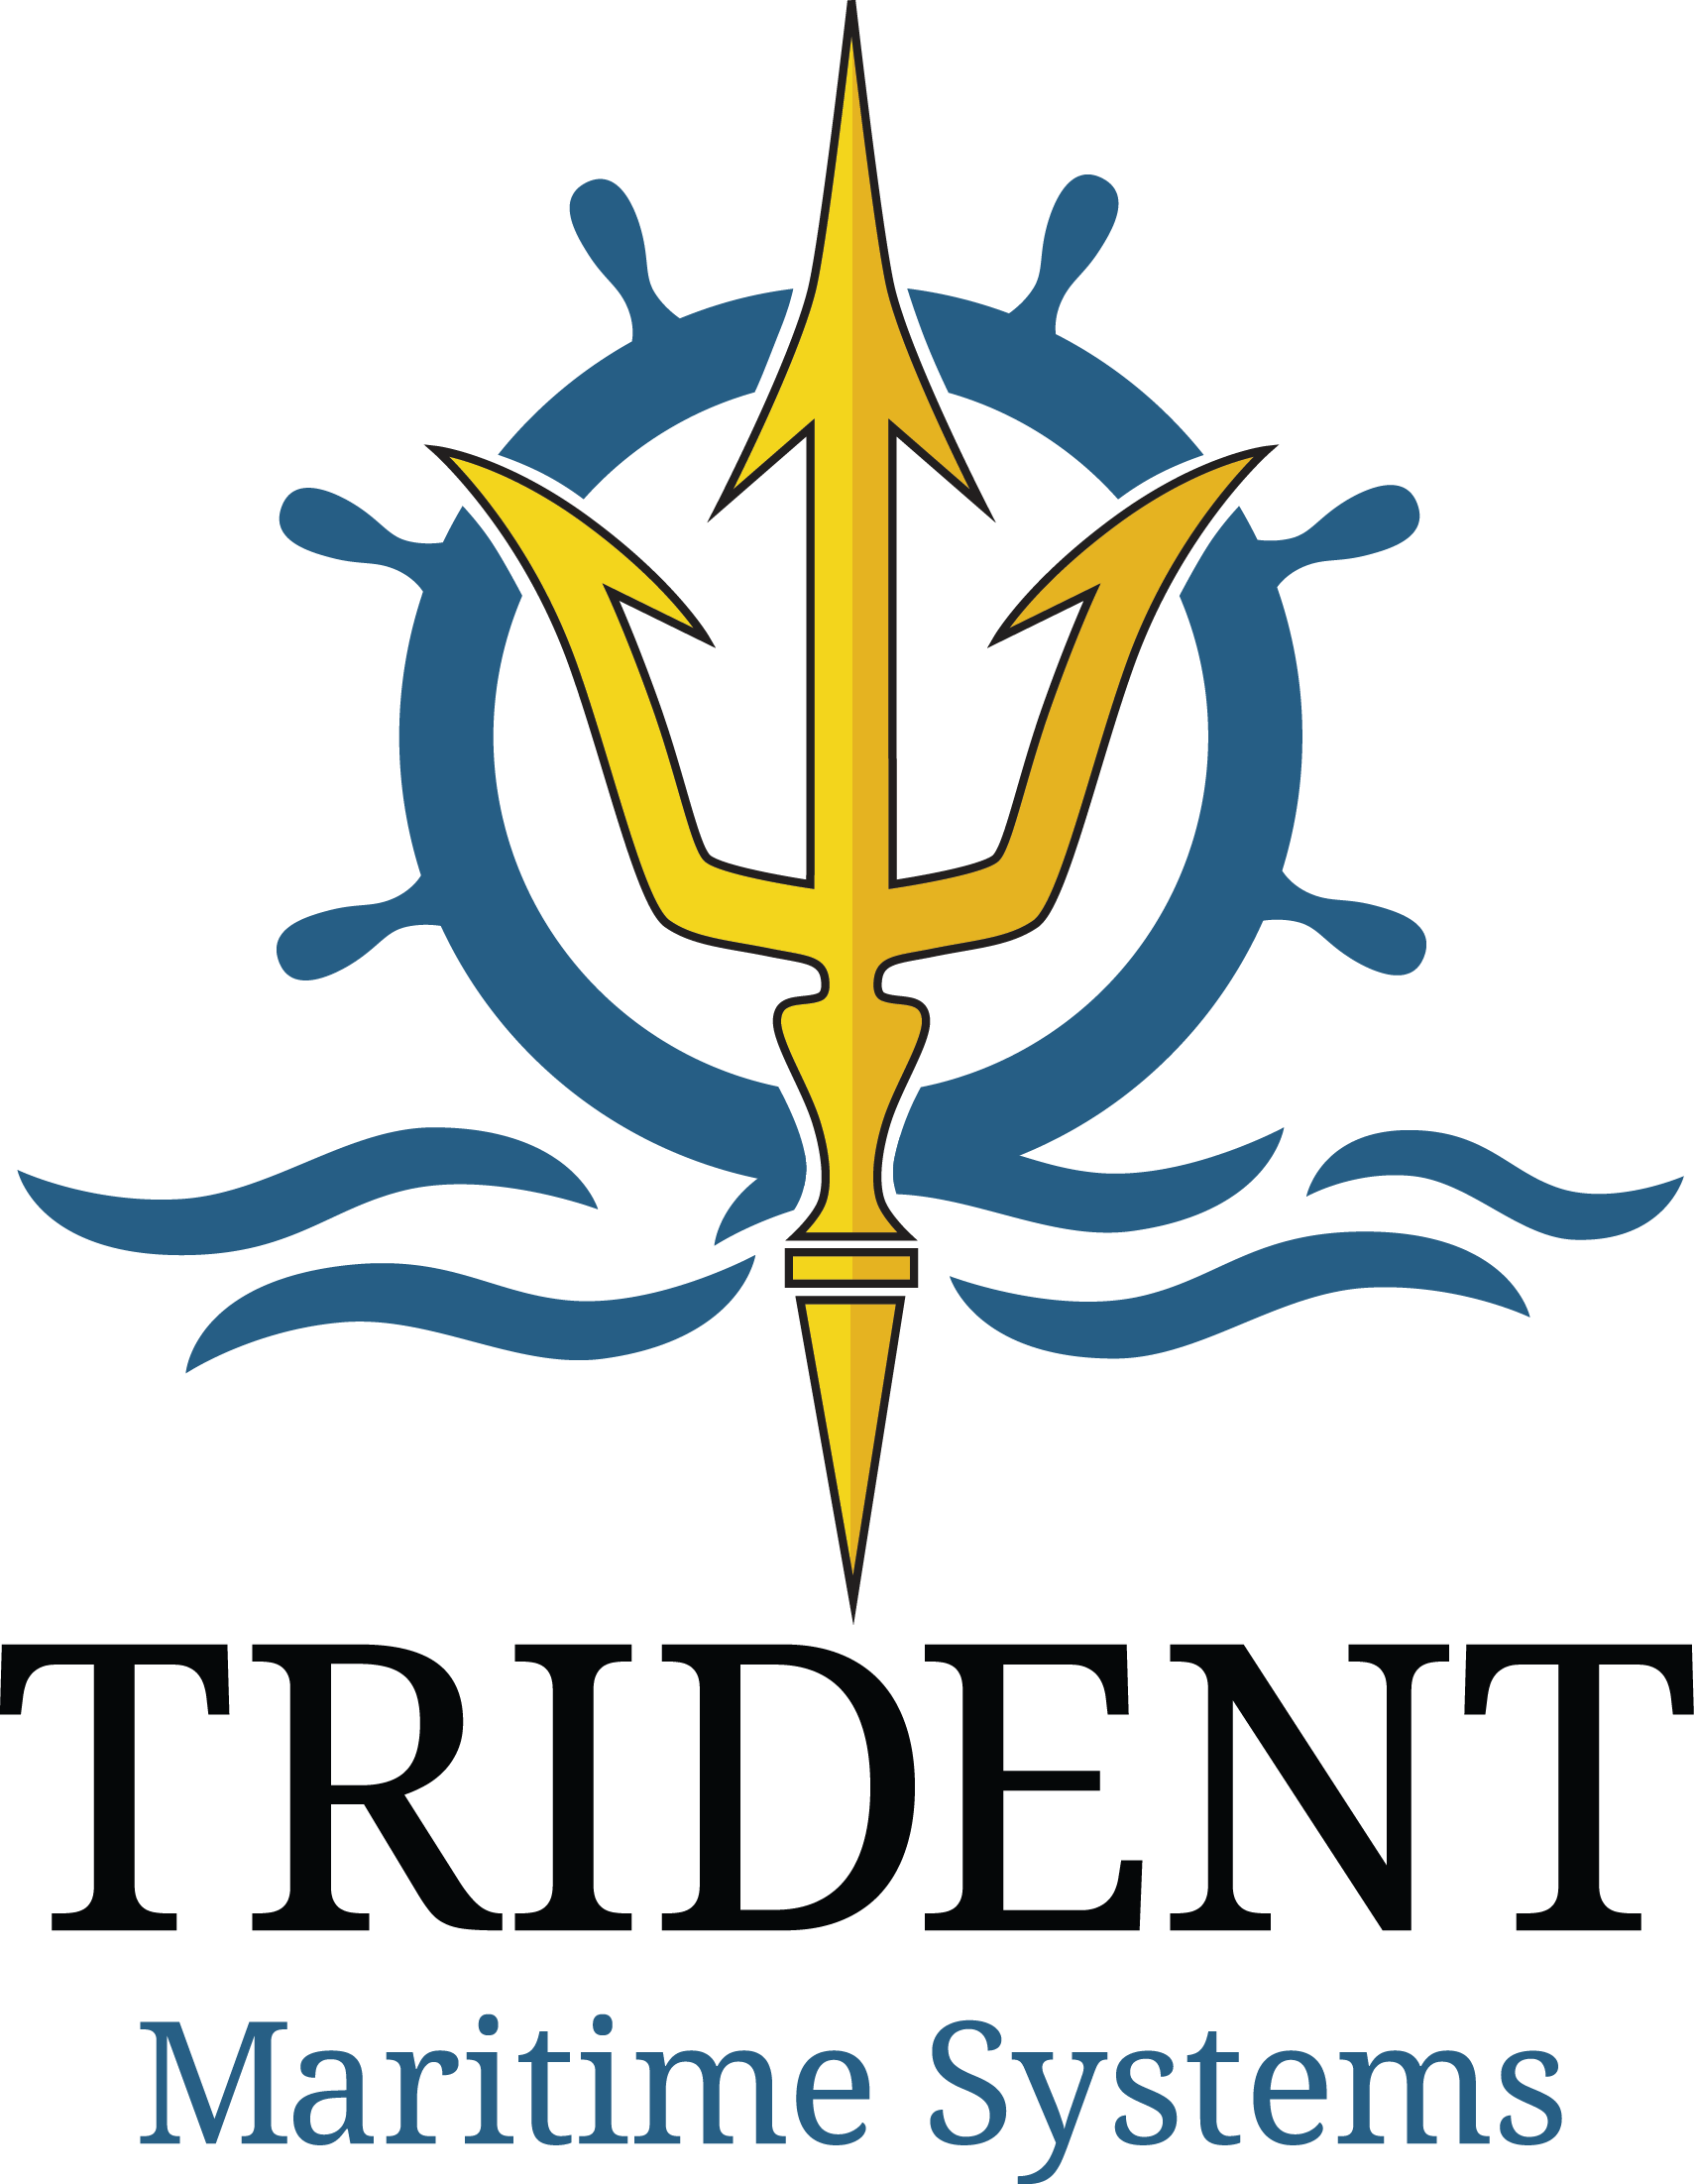 USJ-IMECO Renamed Trident Maritime Systems, November 3 2014